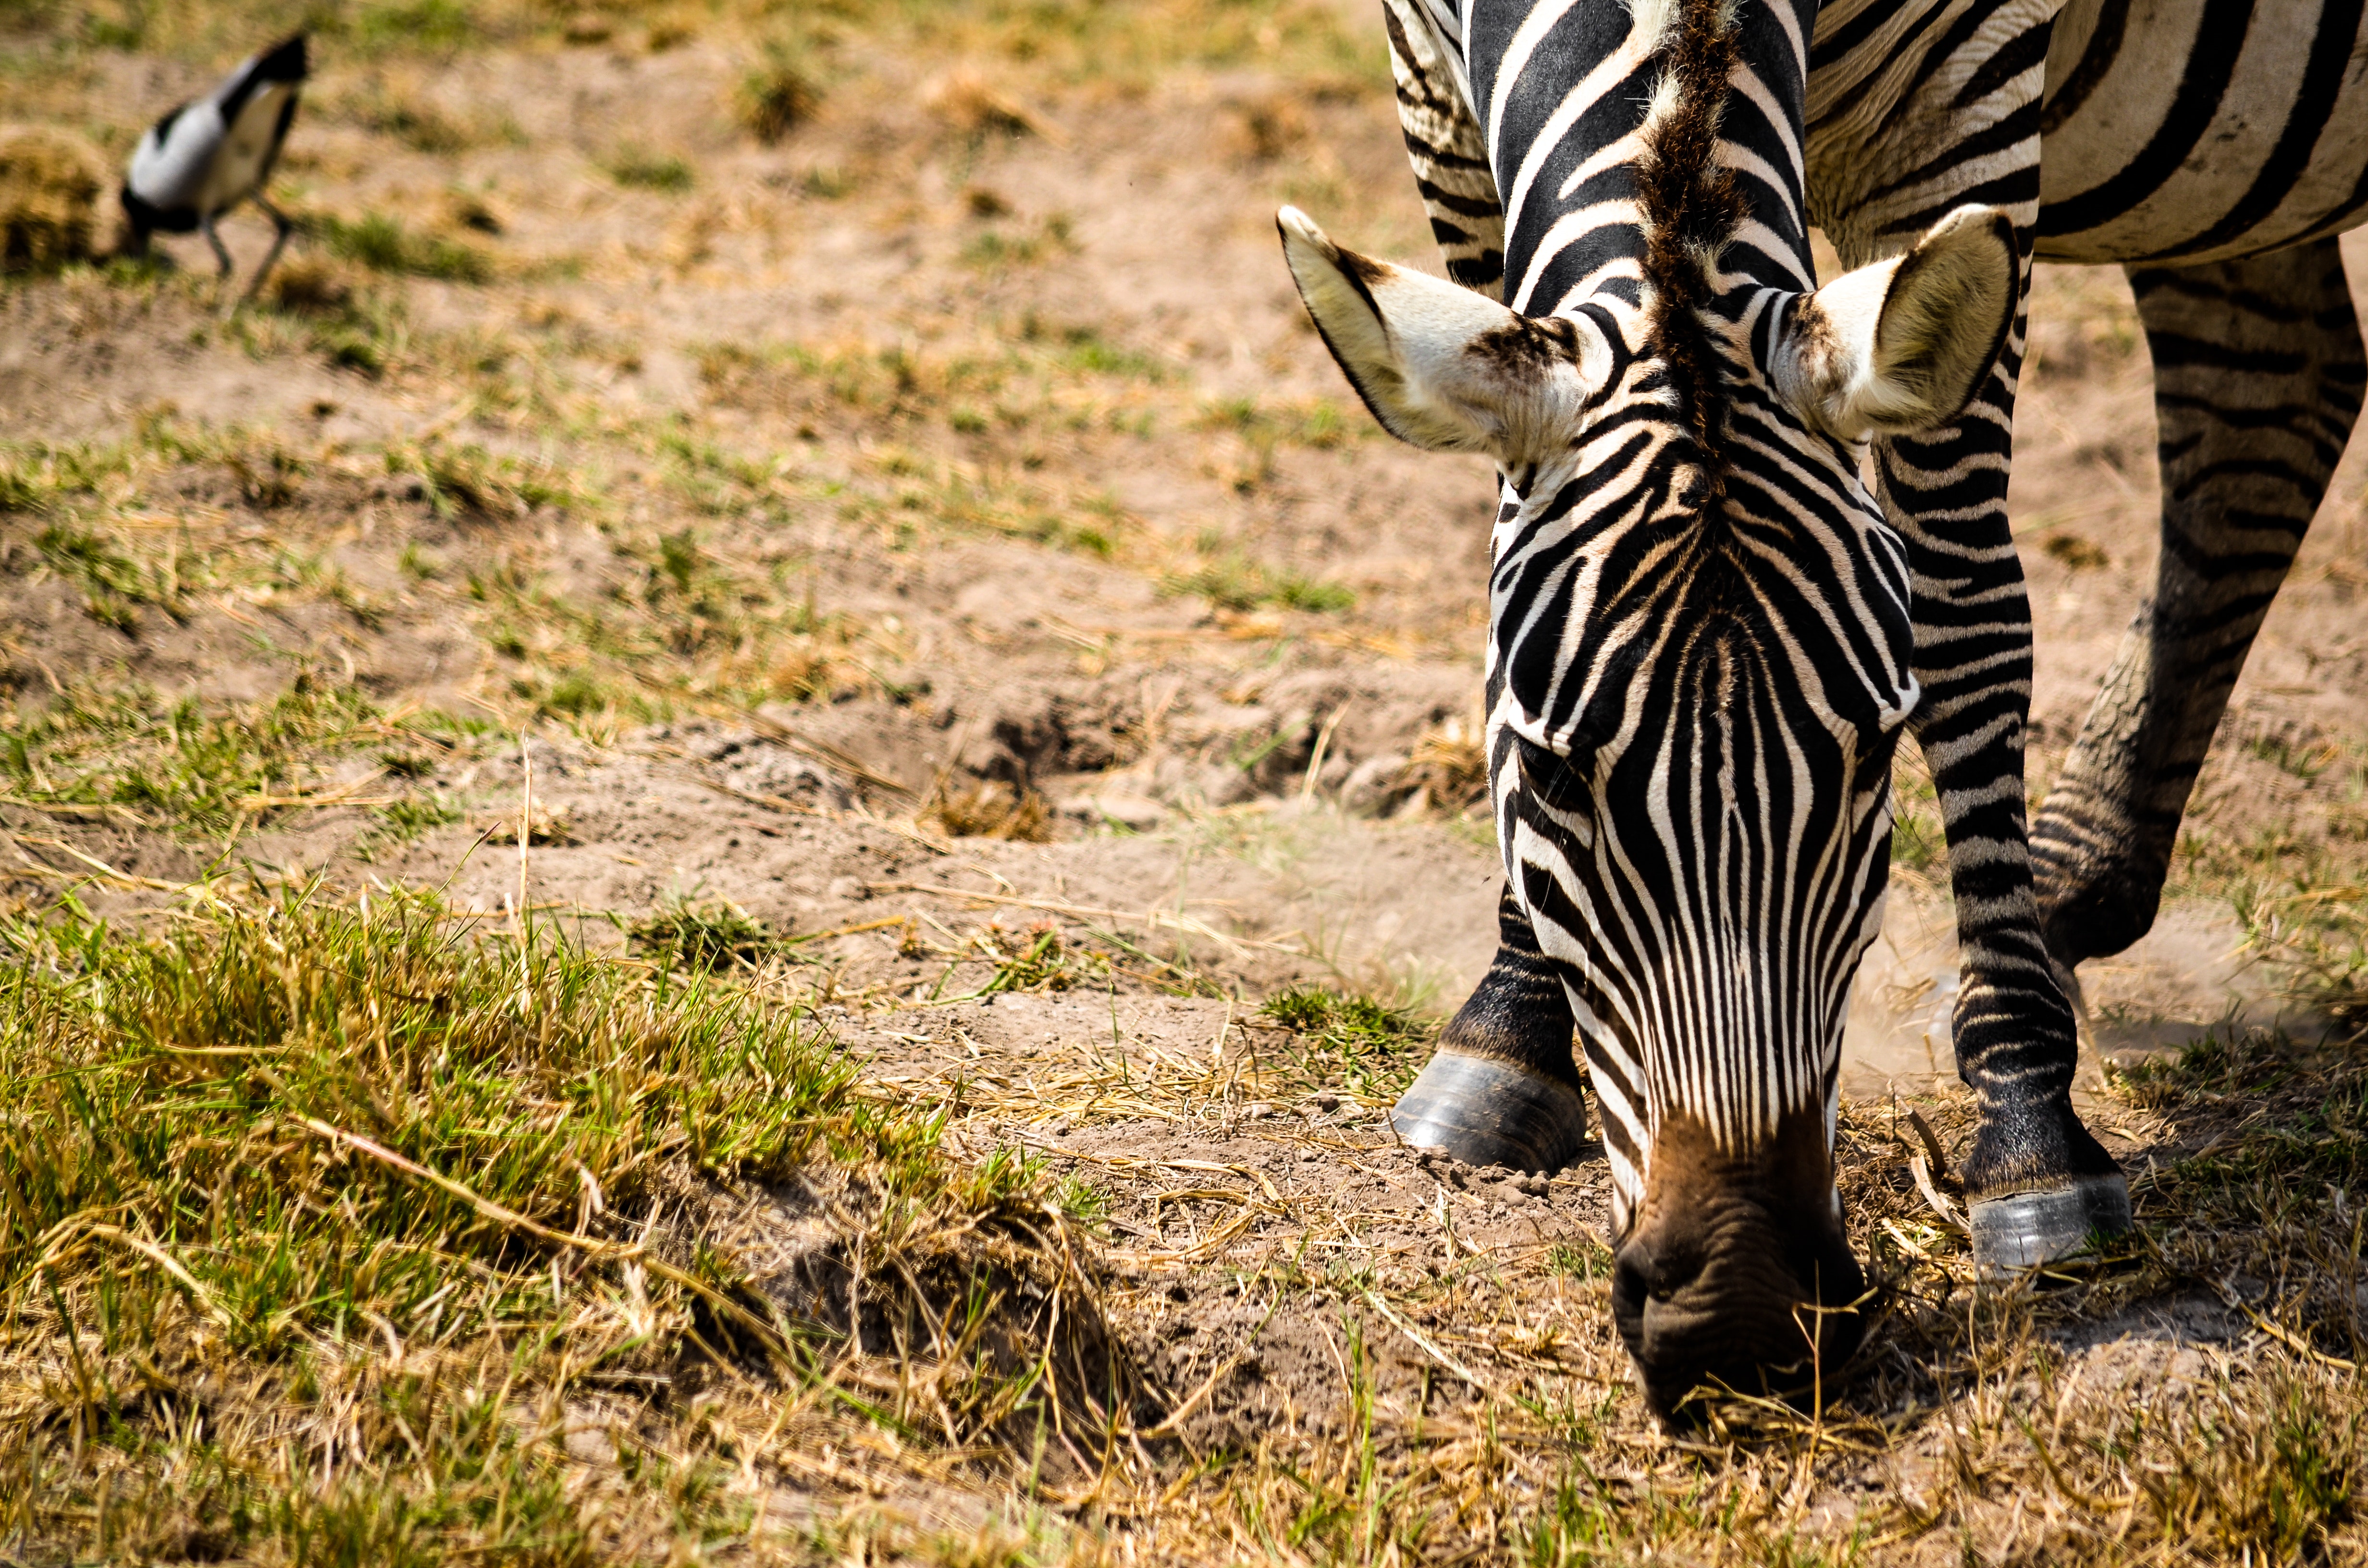 Zebra eating grass selective focus photography